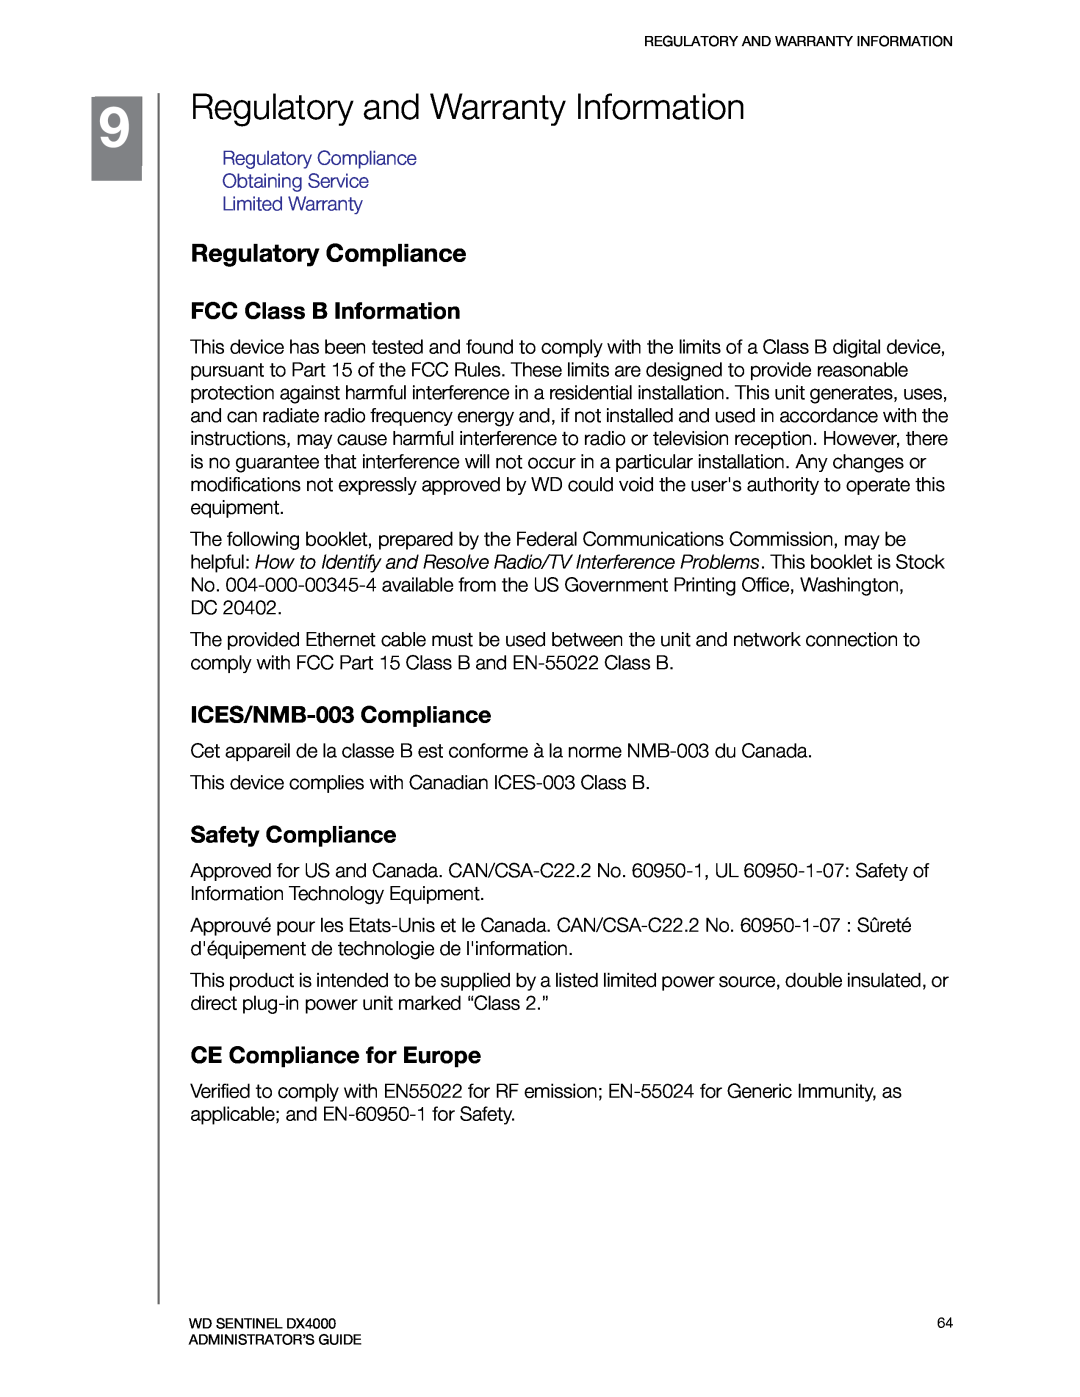 Western Digital WDBLGT0120KBK manual Regulatory and Warranty Information, Regulatory Compliance, FCC Class B Information 